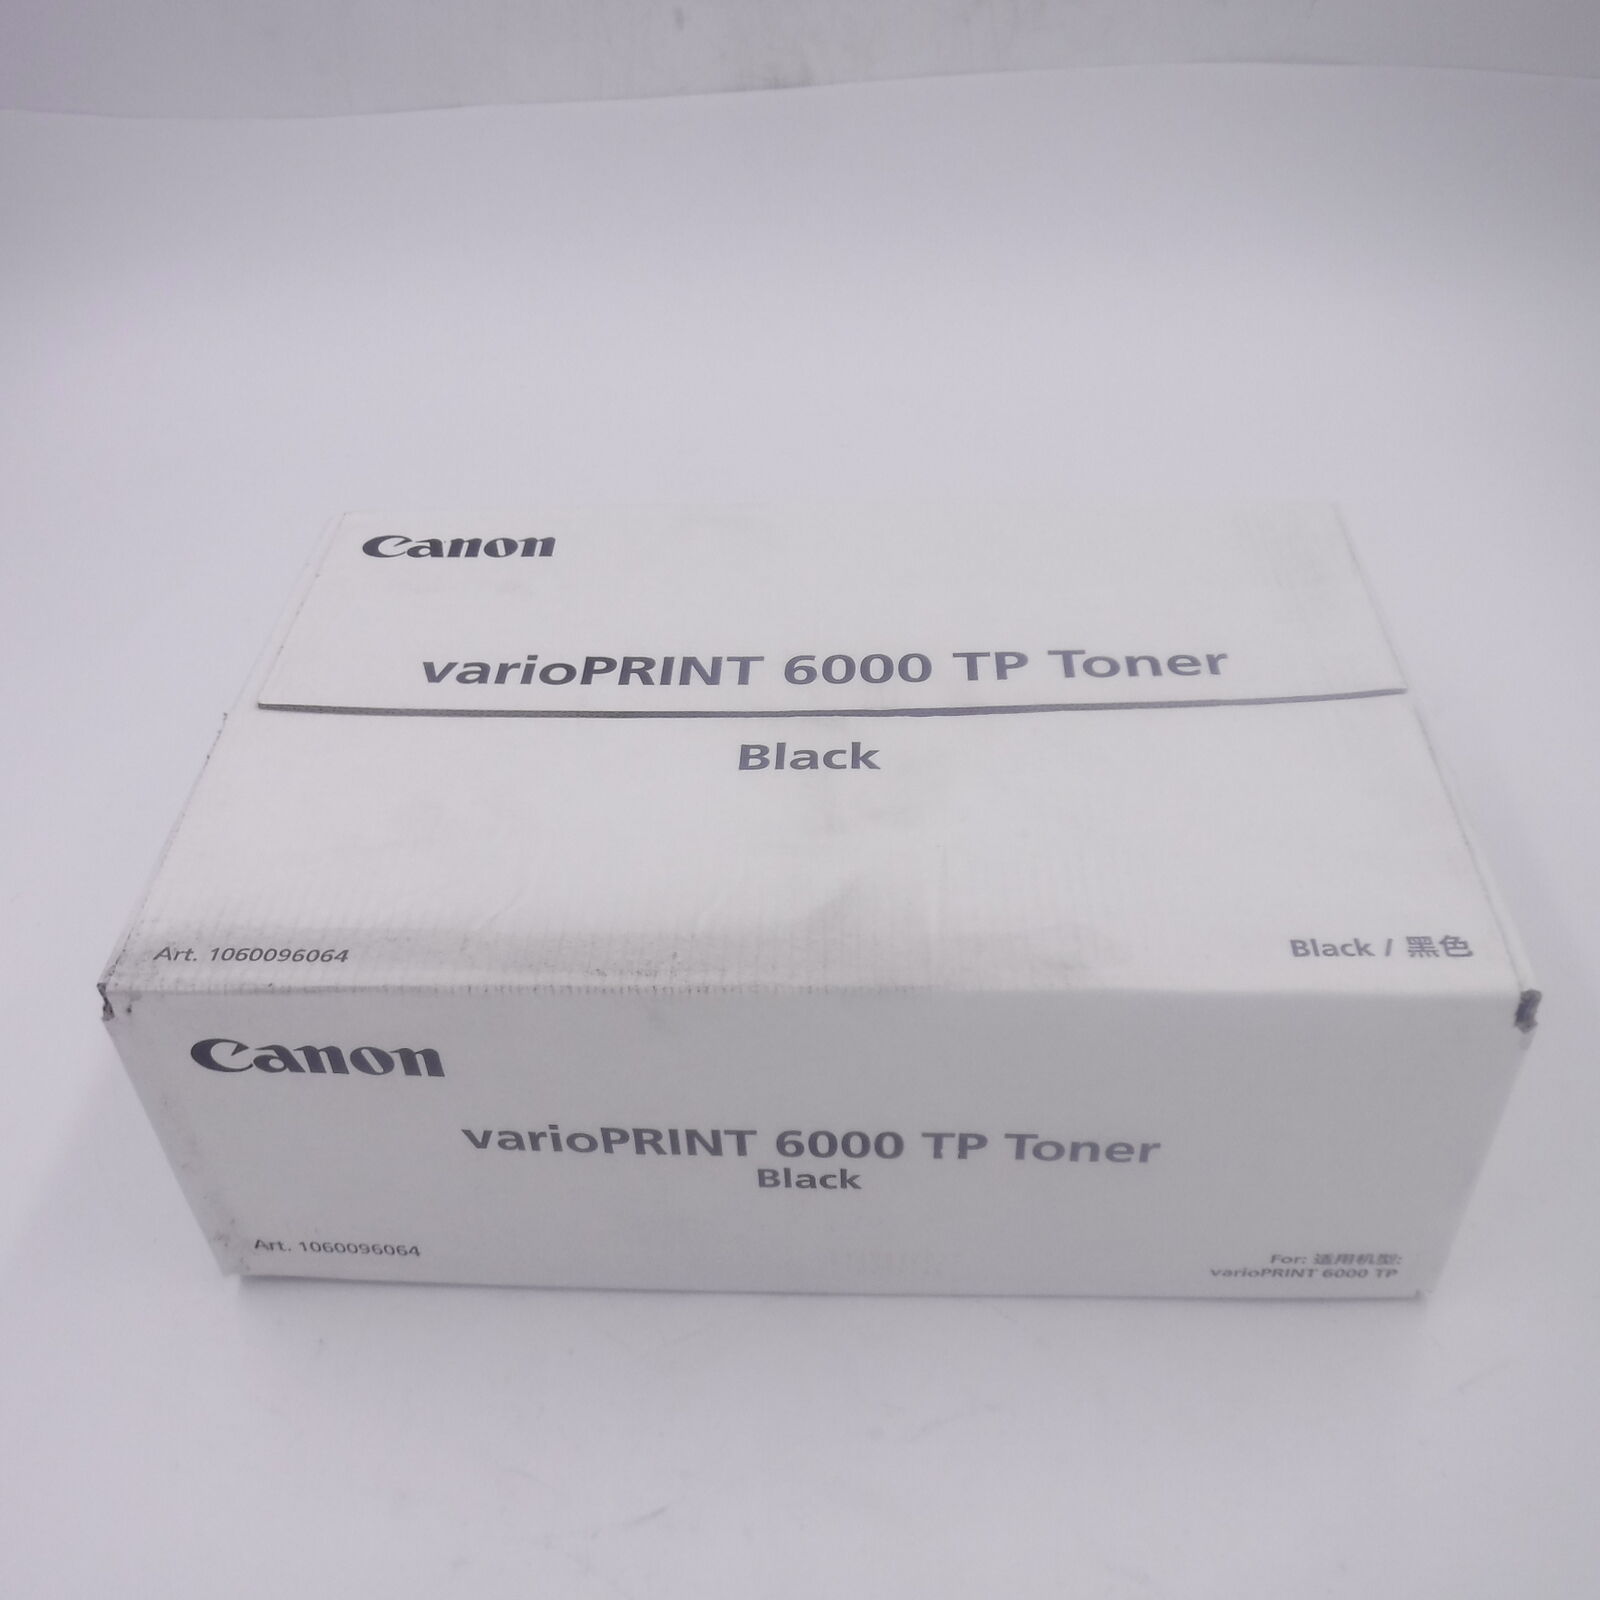 Genuine OEM Canon varioPrint 6000 TP Black Toner 7492B002 1060096064